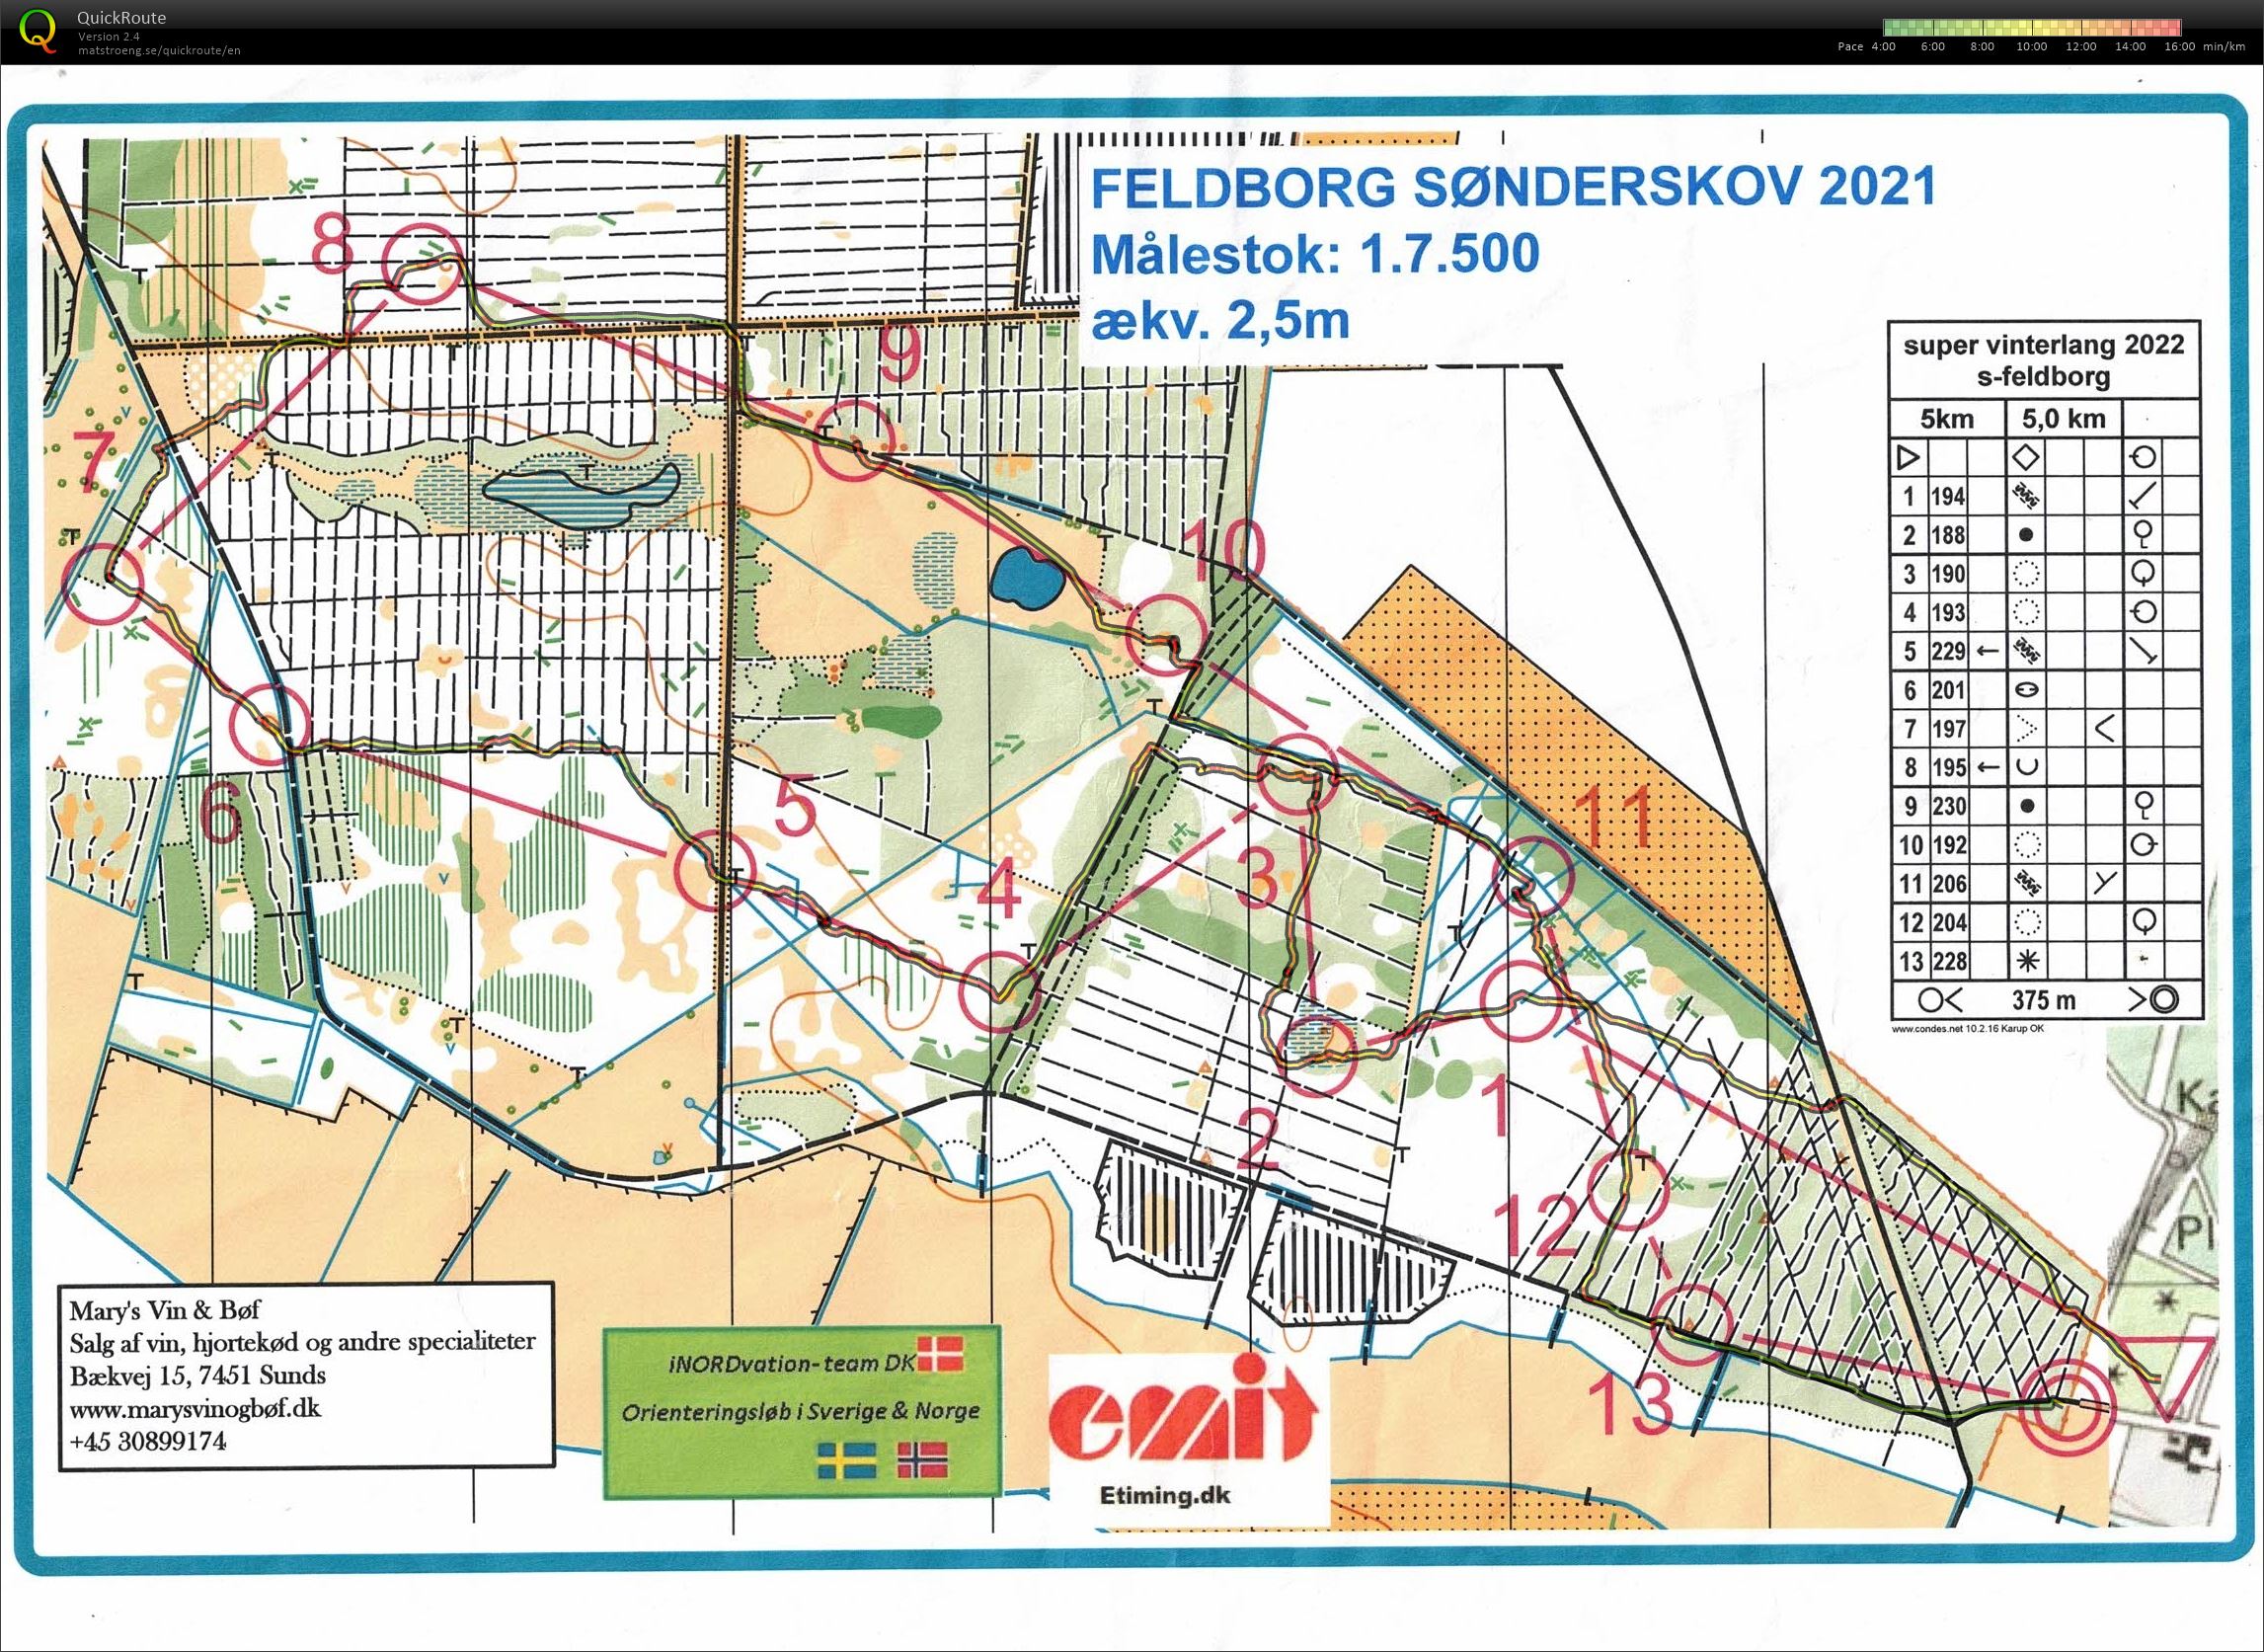 Feldborg Sønderskov, Super Langdistance 2, Bane 5 km, Pia Gade, 020122 (02/01/2022)